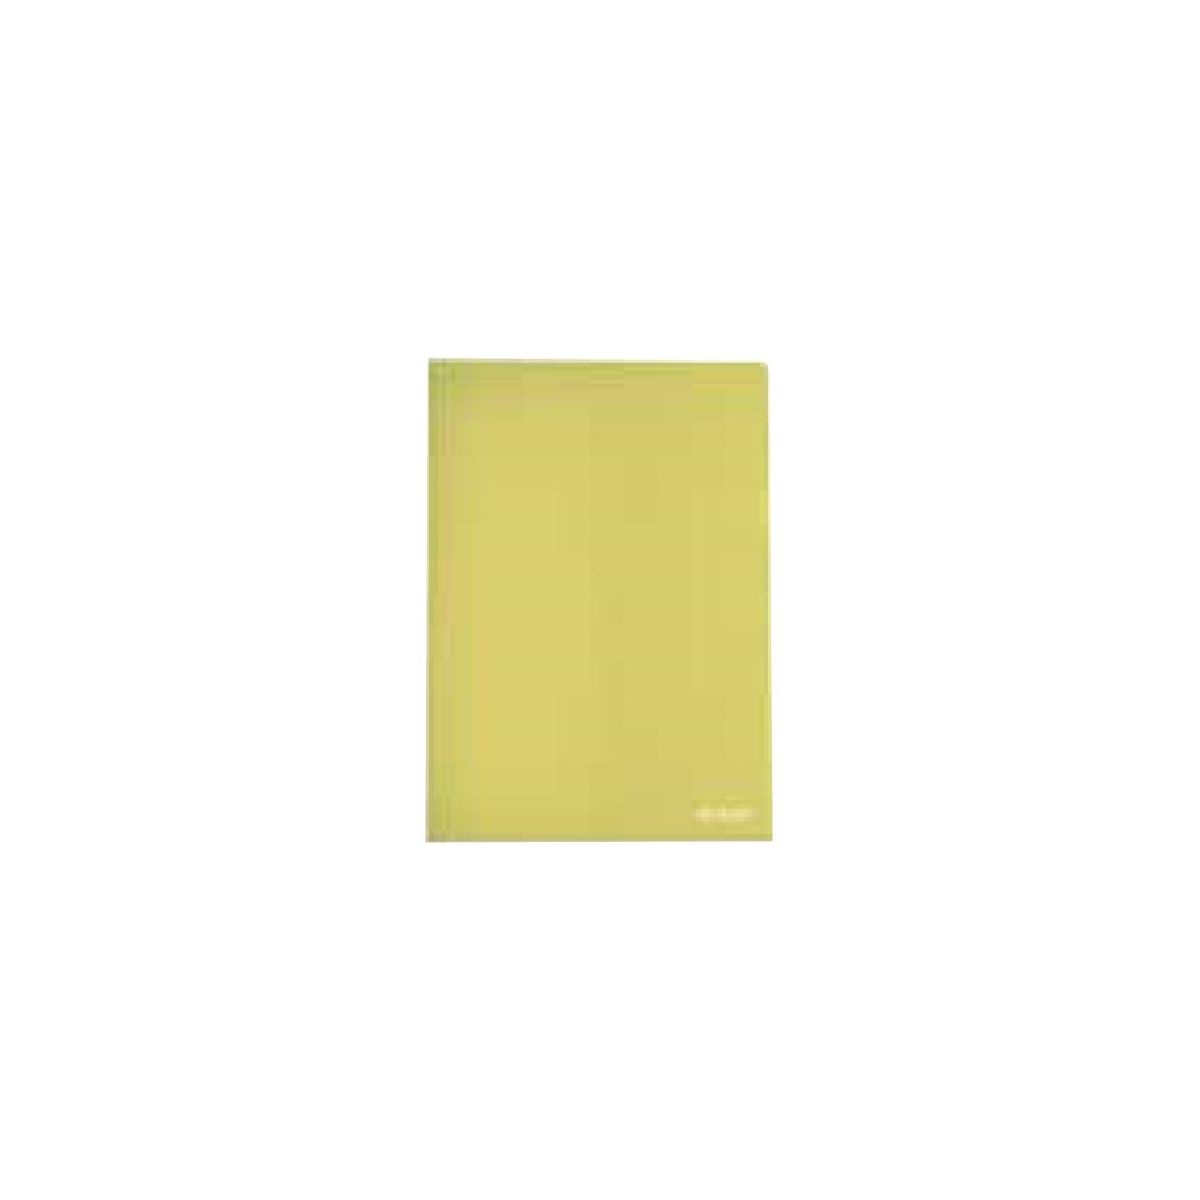 Koszulki na dokumenty Herlitz ŻÓŁTA krystaliczna A4 kolor: żółta typu L (9030545)